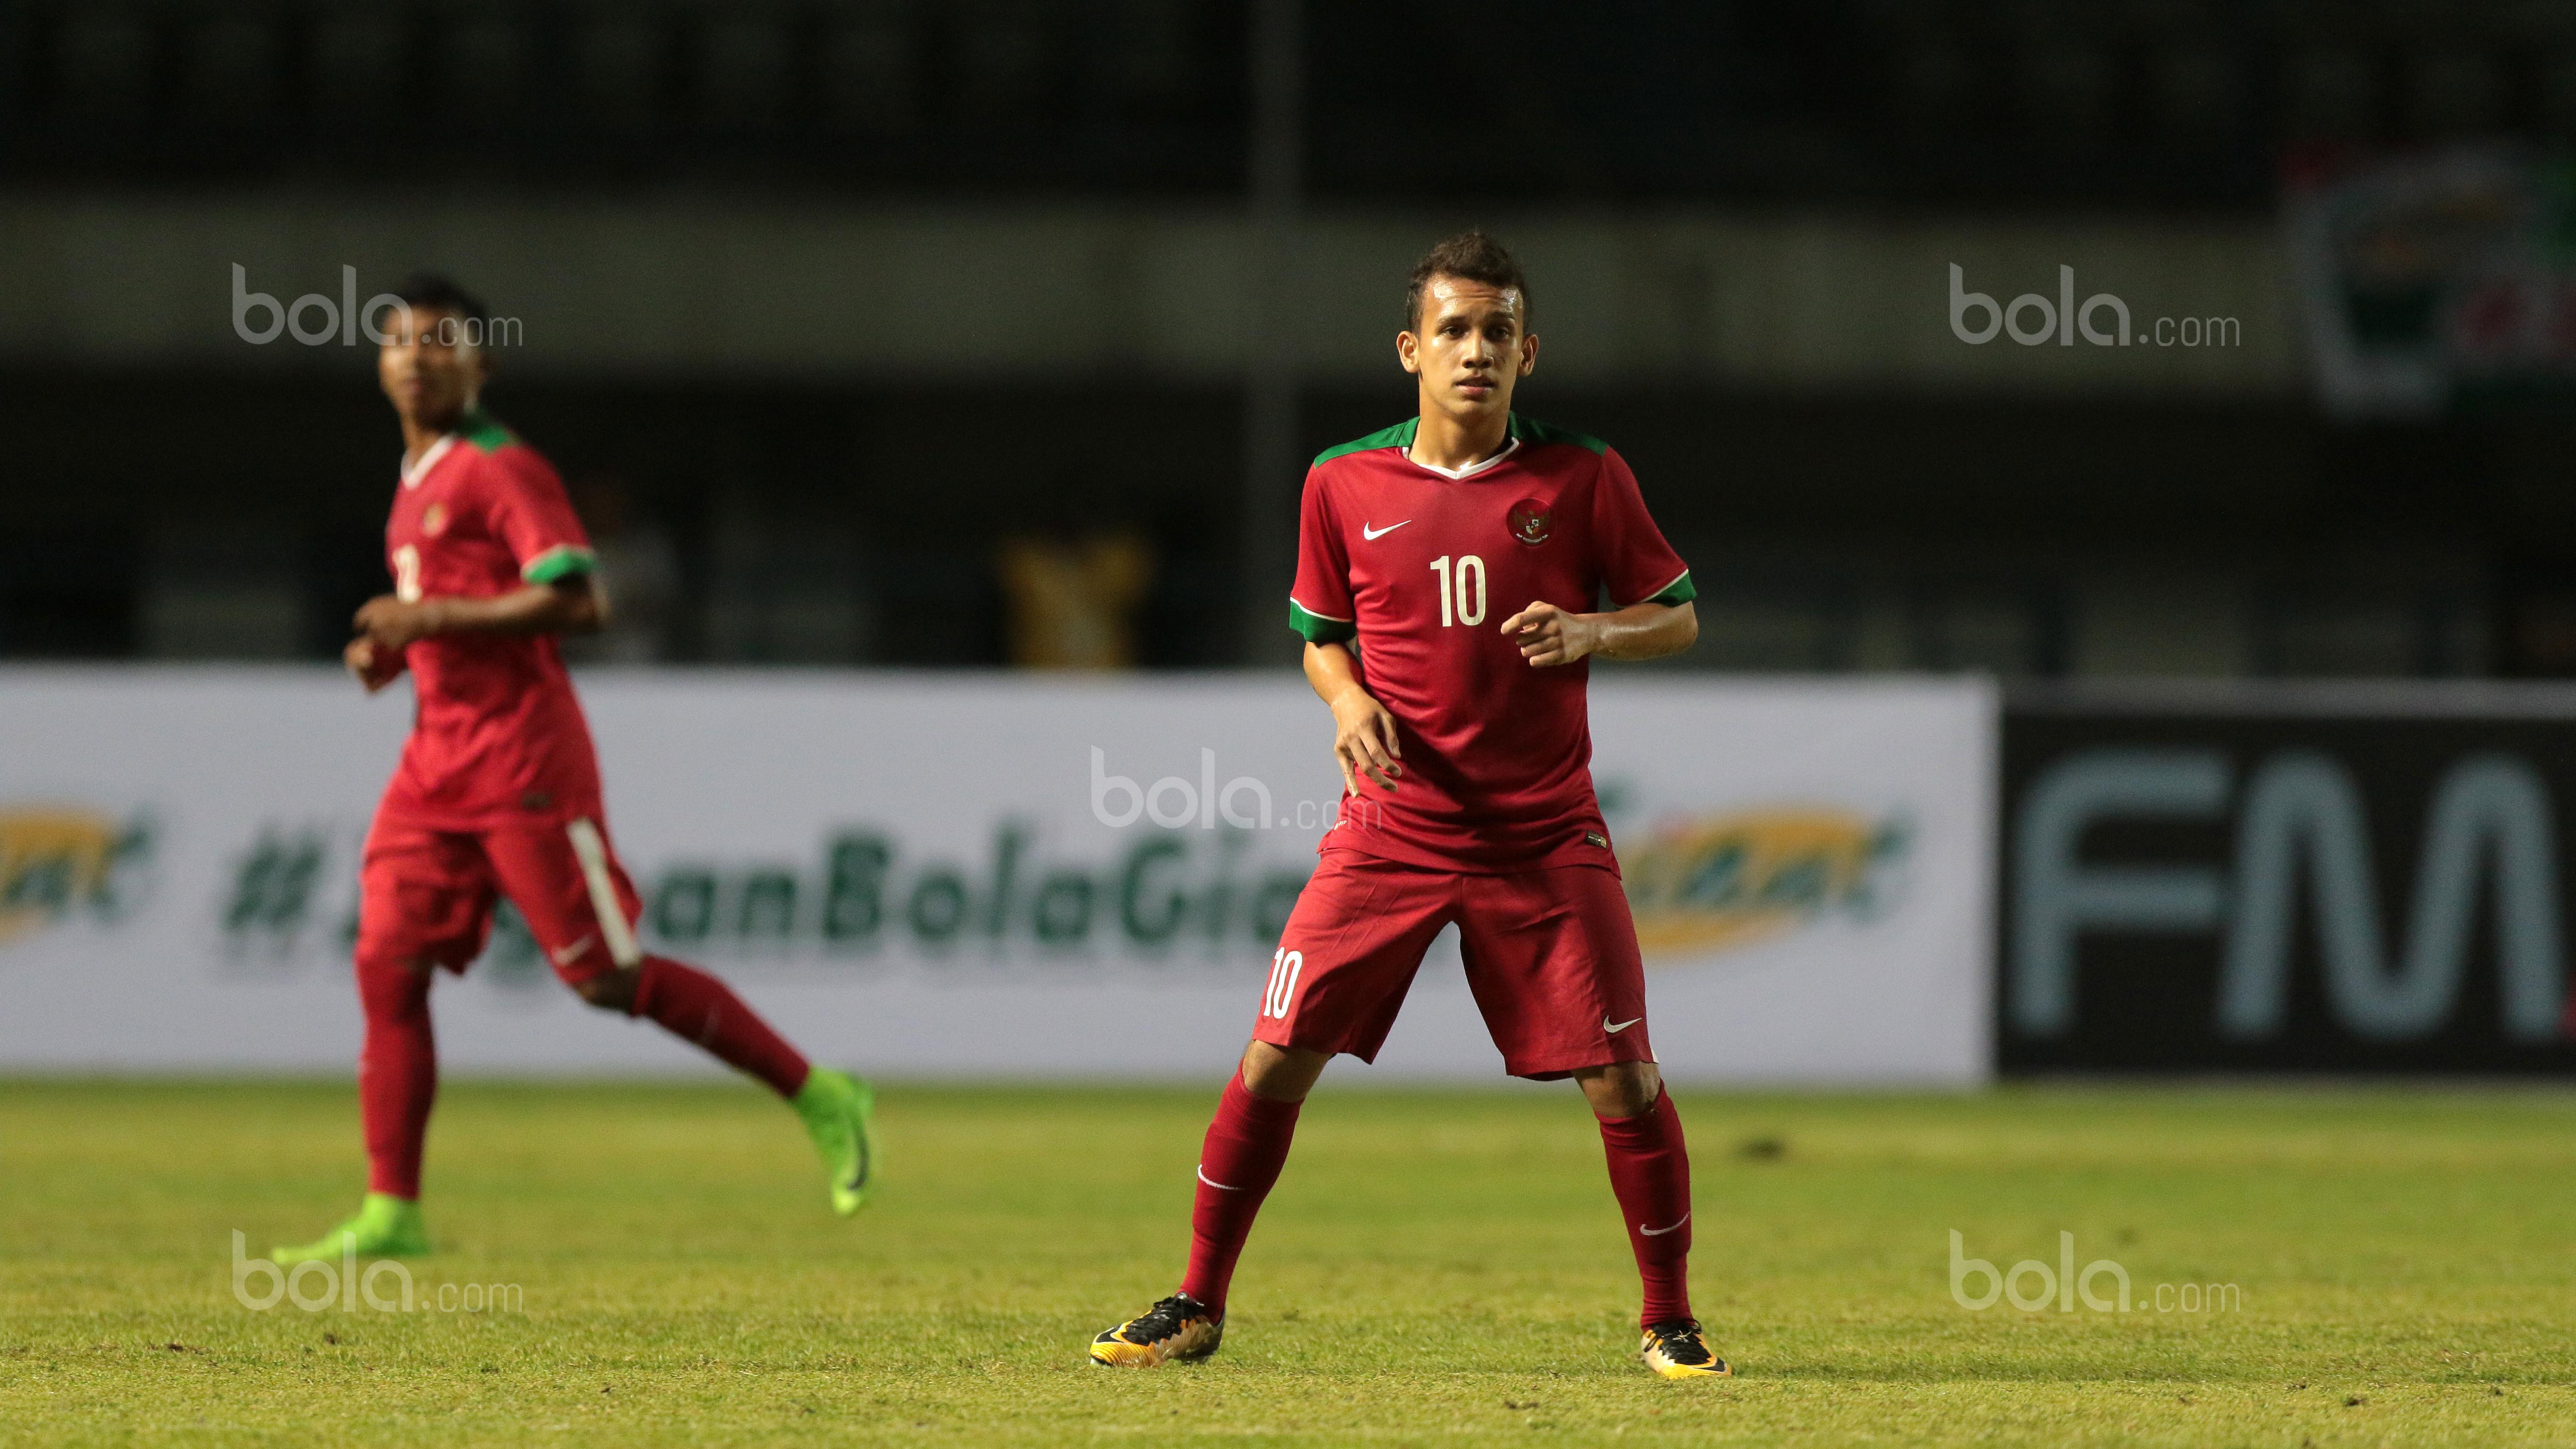 Piala Aff U 18 Debut Mulus Timnas Indonesia U 19 Bola Liputan6com